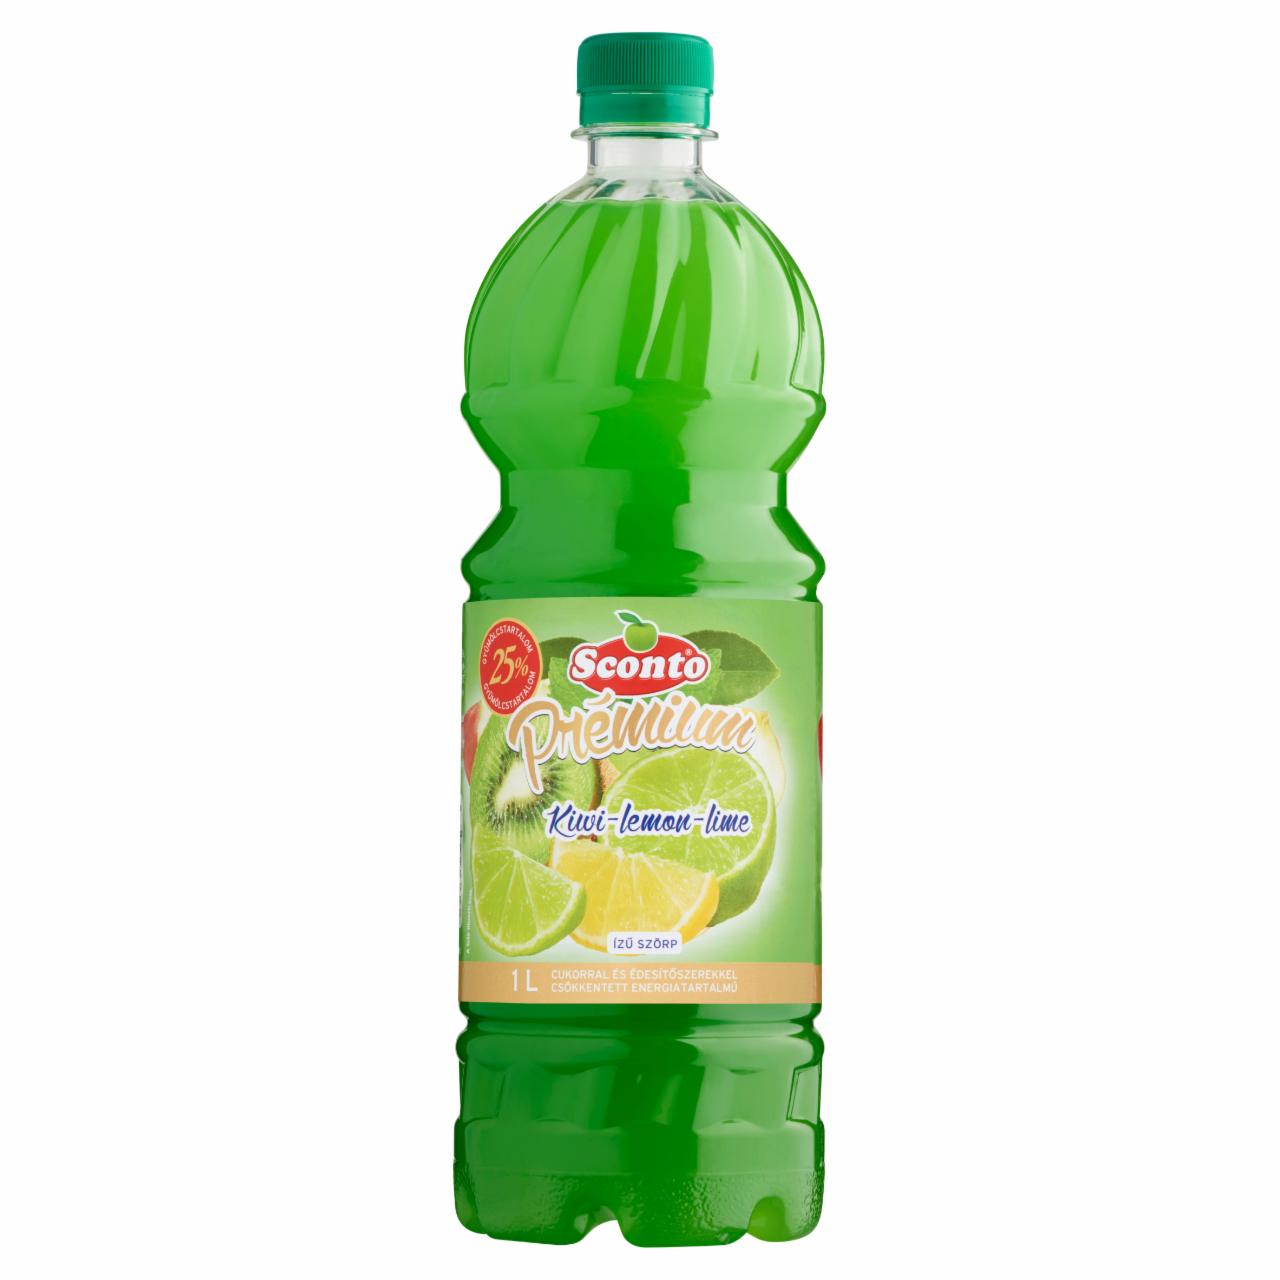 Photo - Sconto Prémium Low-Energy Kiwi-Lemon-Lime Flavoured Syrup 1 l